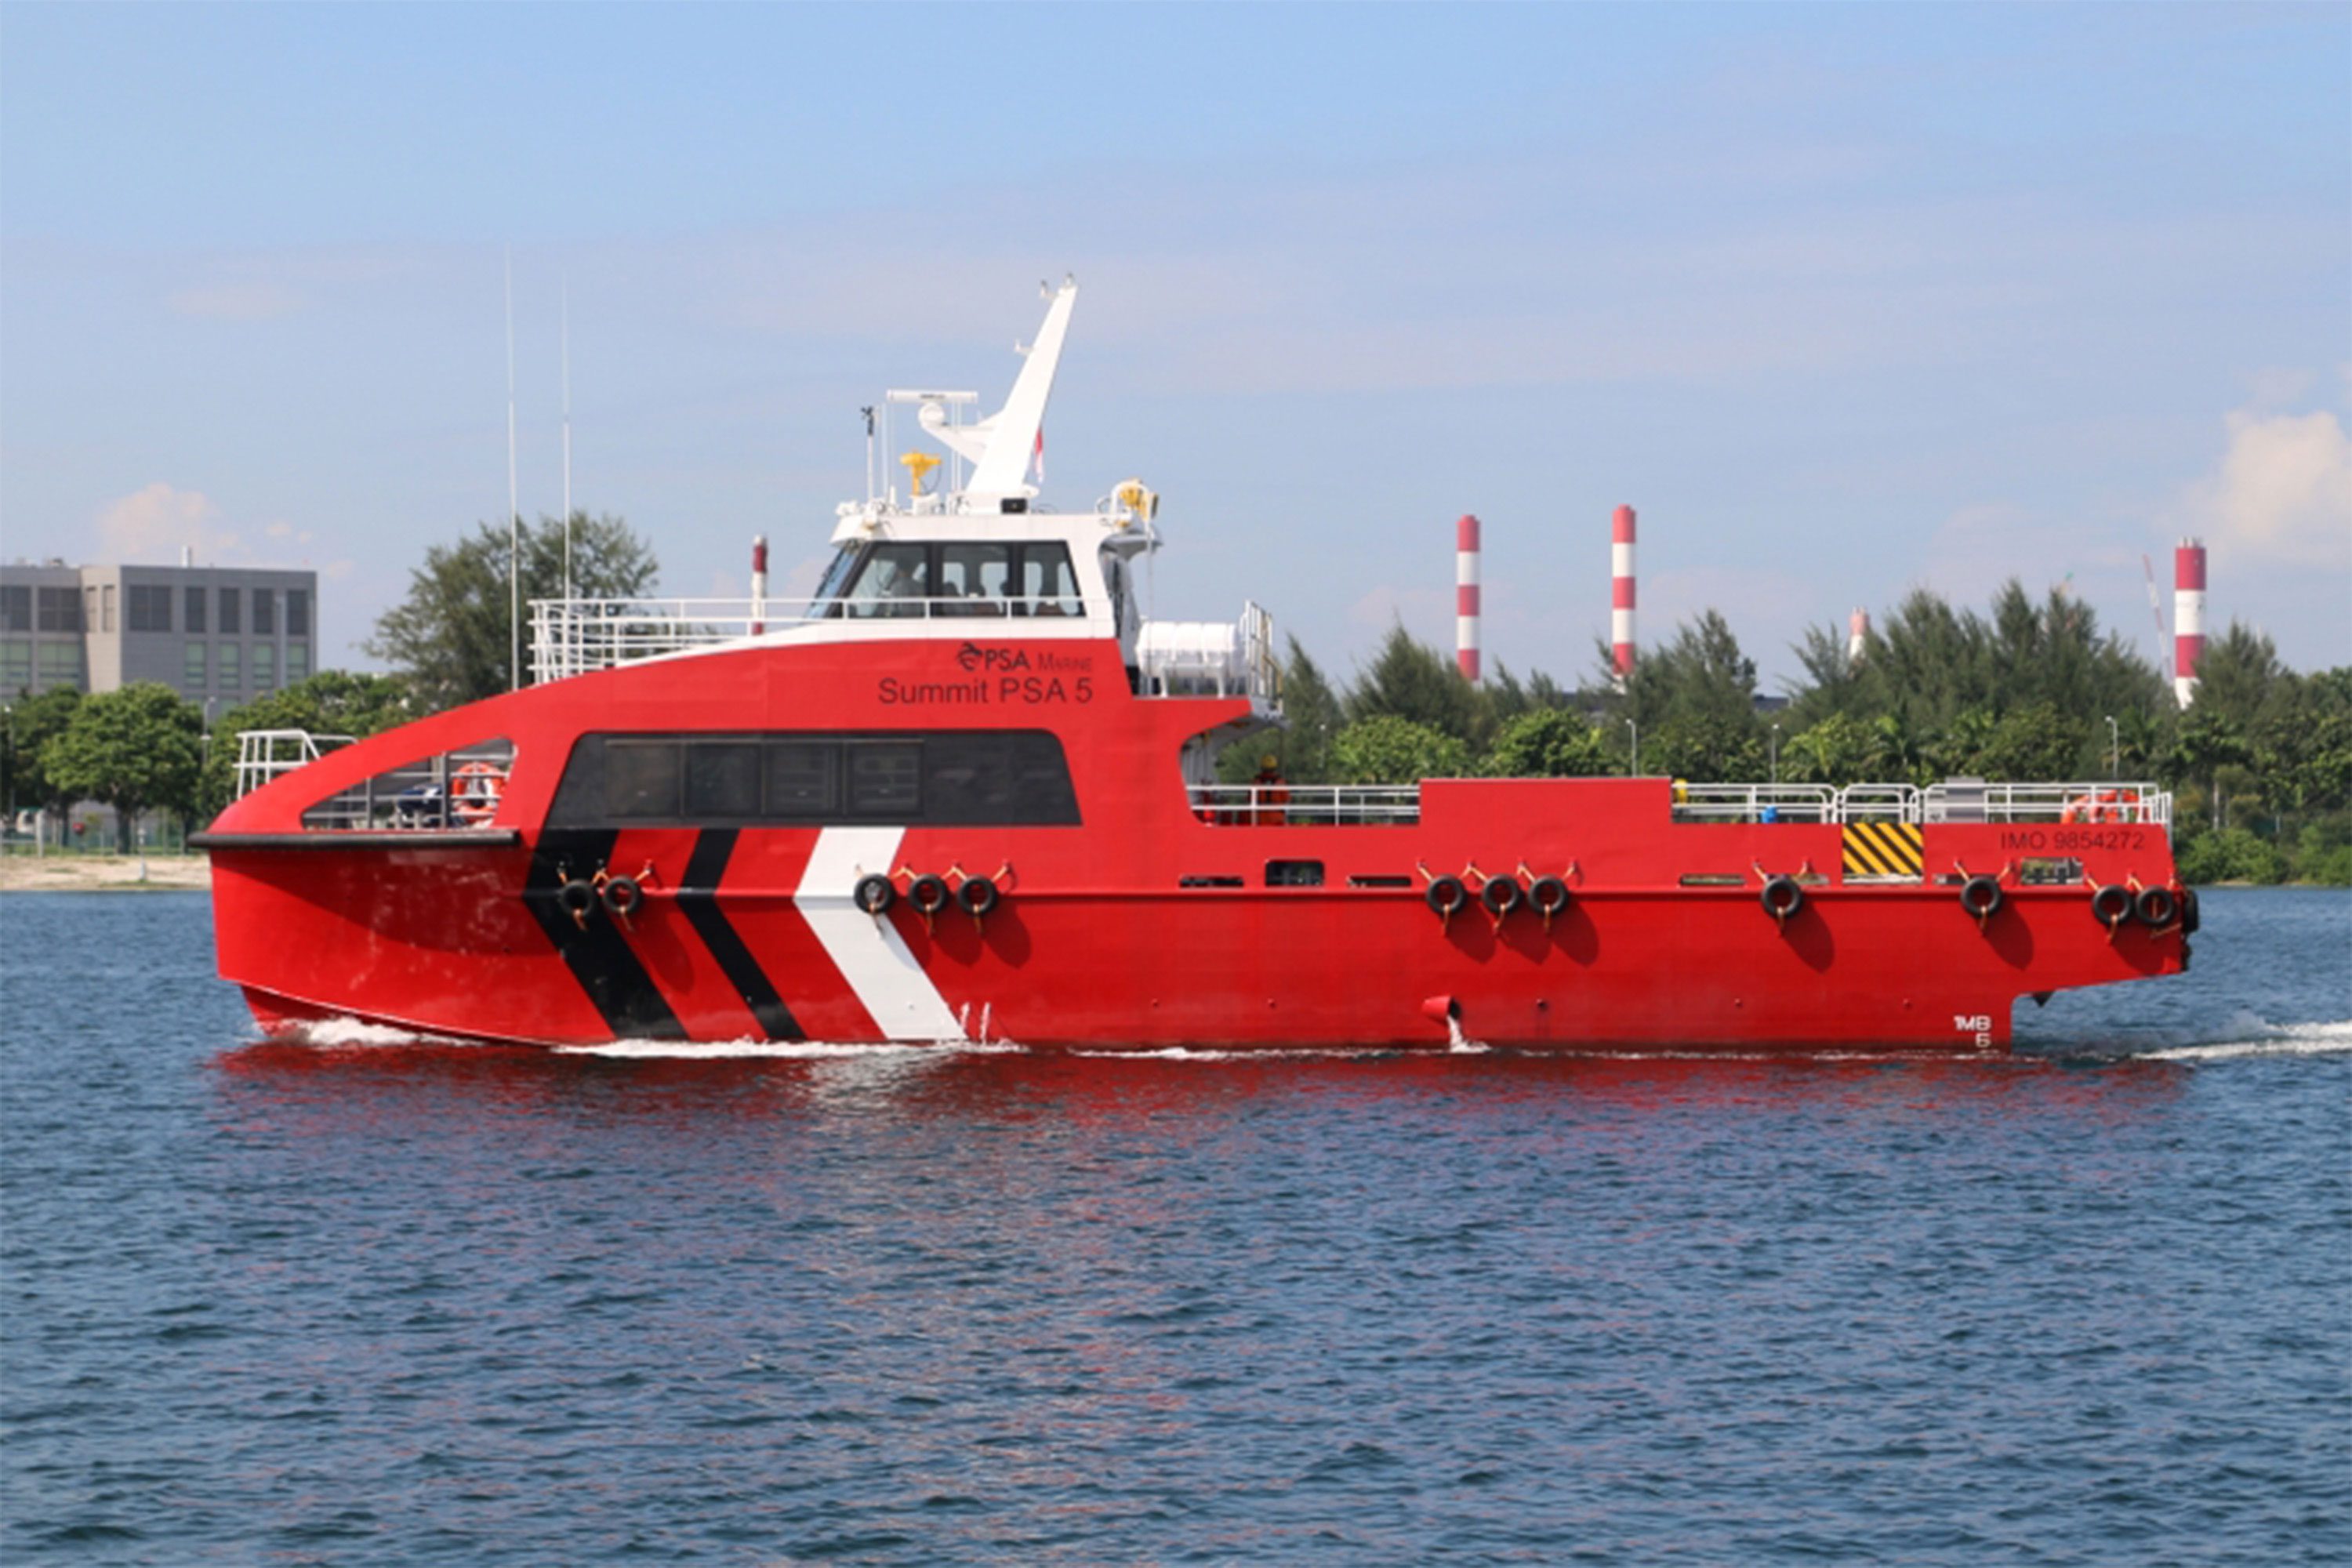 Lita Ocean Delivers Incat Crowther-Designed 25m Crewboat